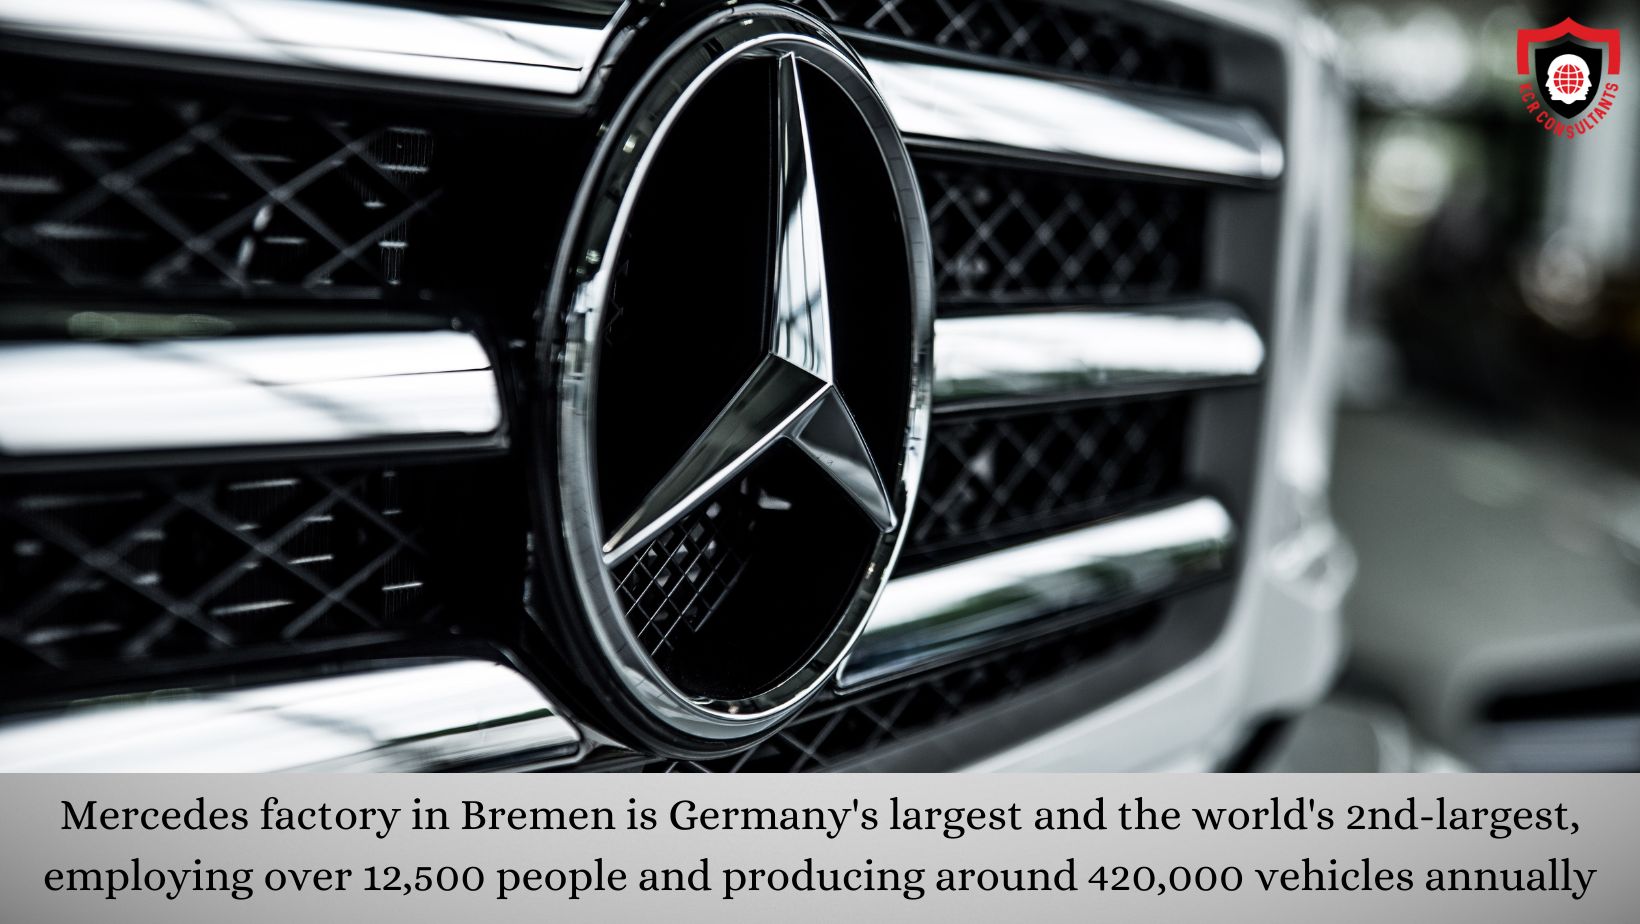 BREMEN - KCR CONSULTANTS - Mercedes factory